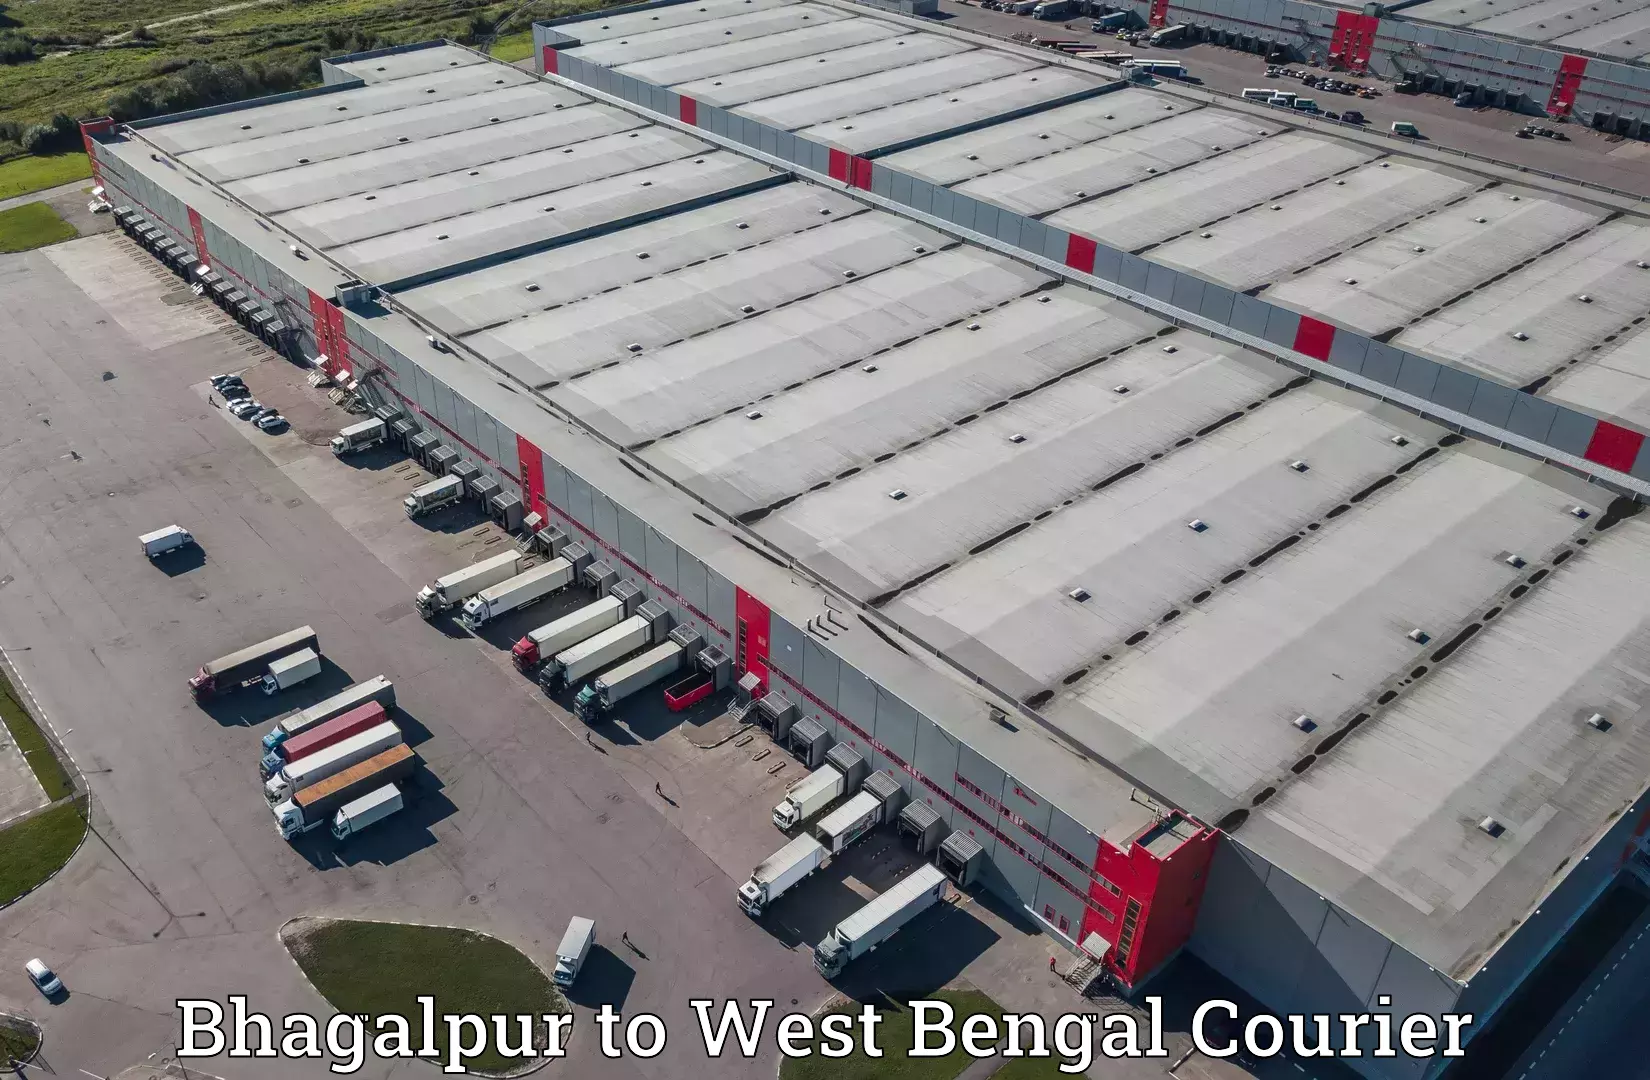 Global logistics network Bhagalpur to West Bengal